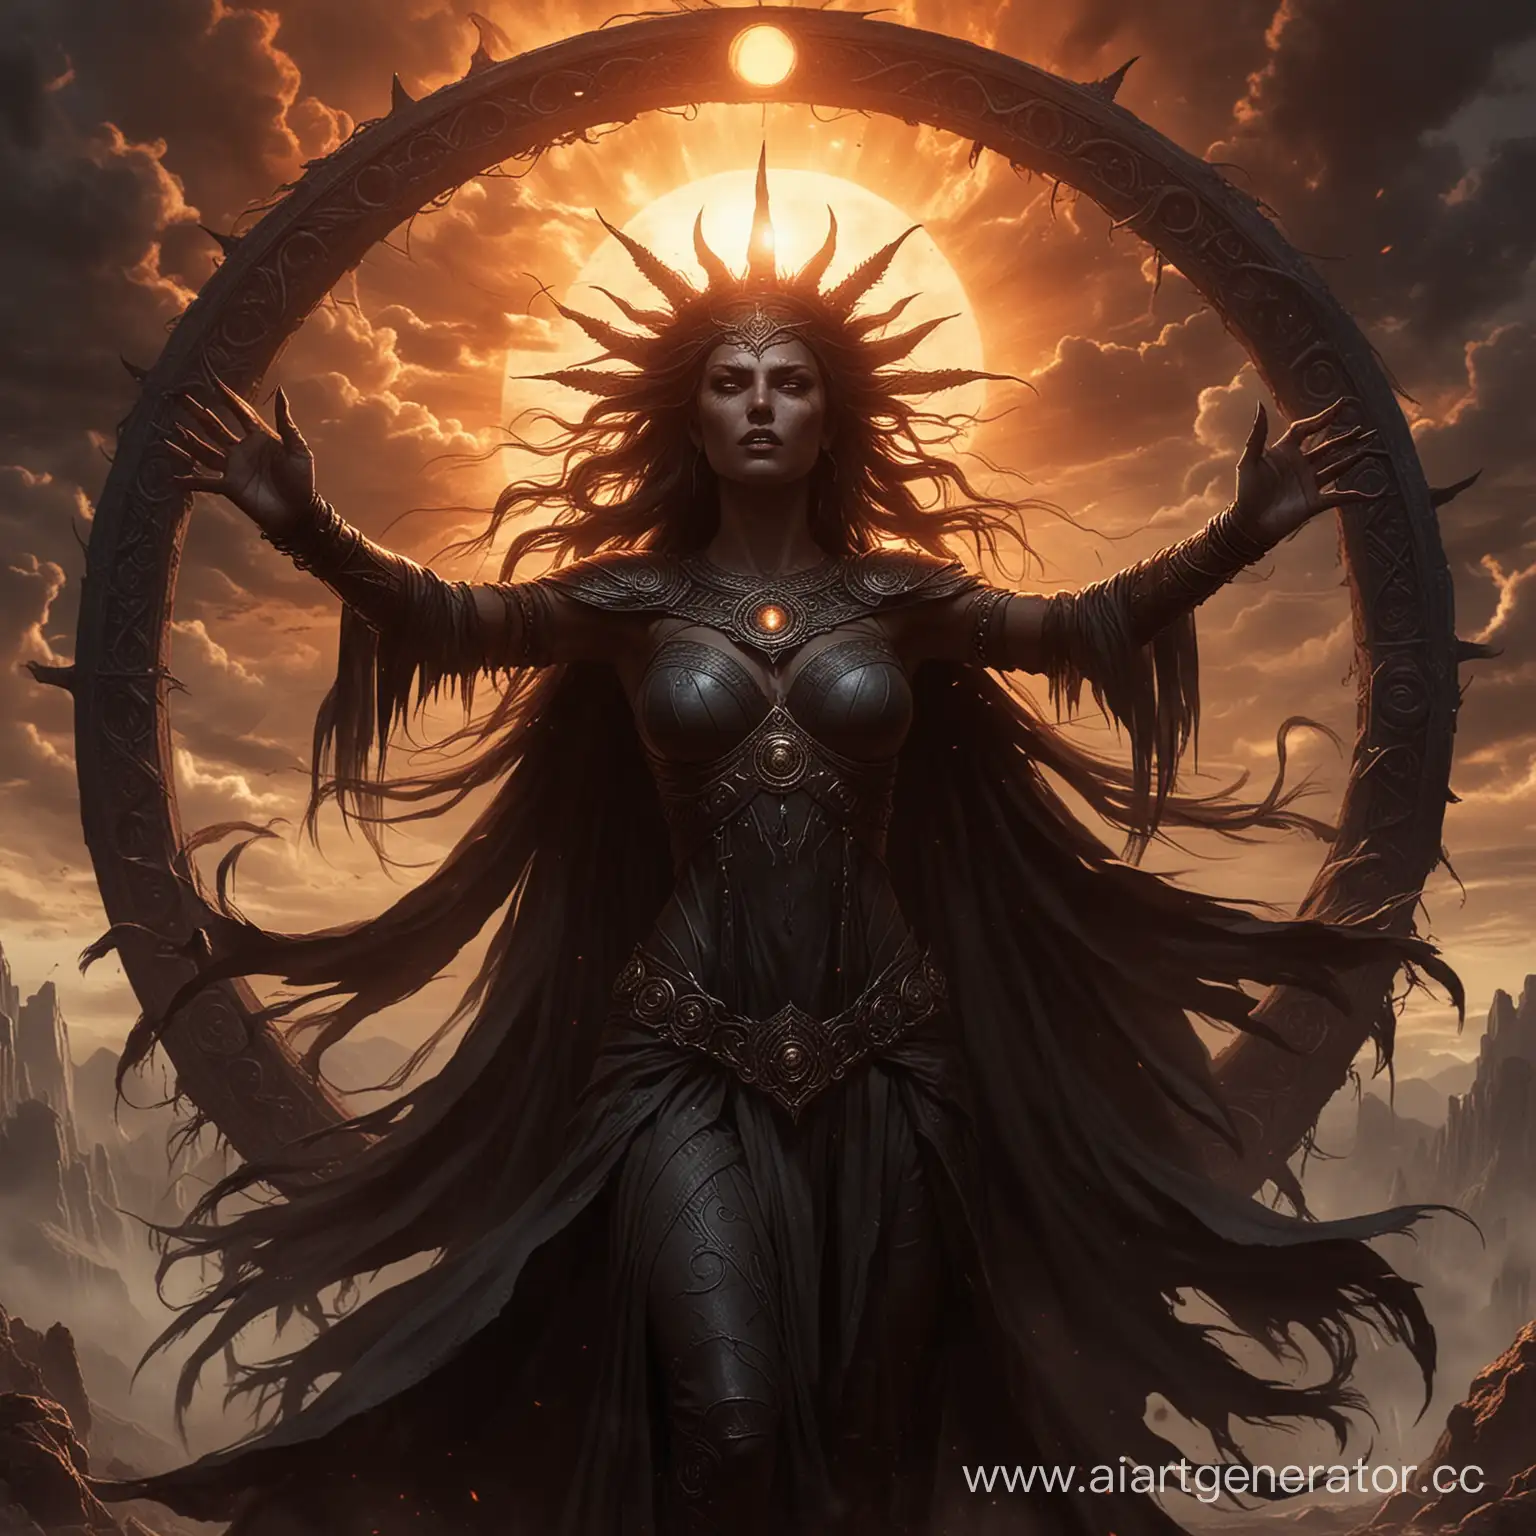 Zatemnina-Maiden-of-the-Black-Sun-A-Terrifying-Eclipse-by-a-Demonic-Entity